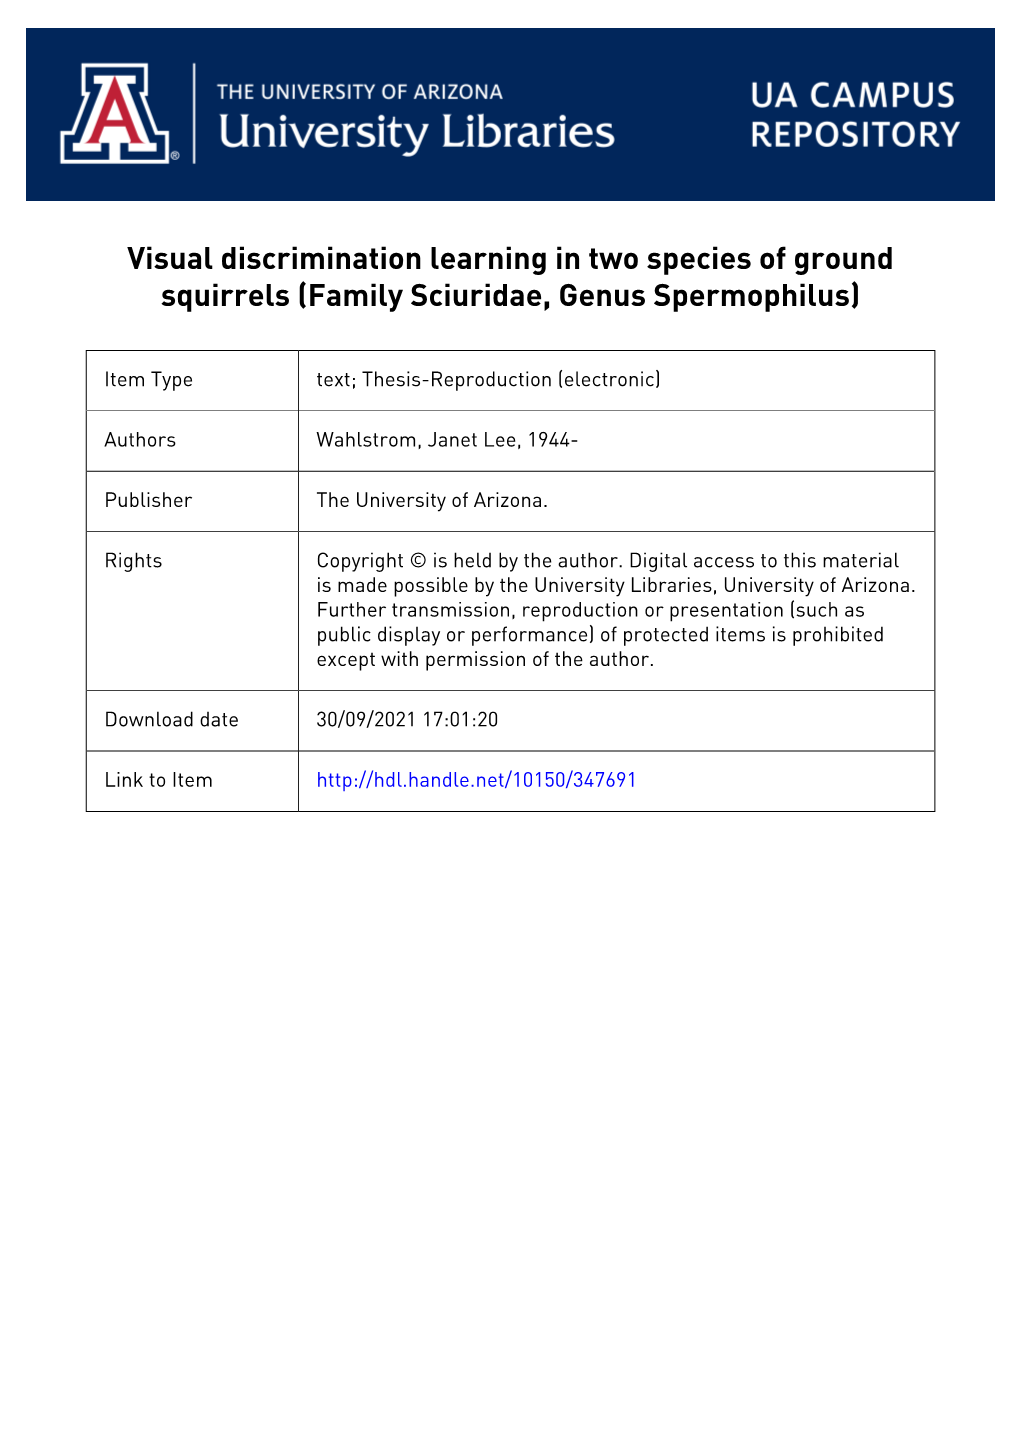 Visual Discrimination Learning in Two Species of Ground Squirrels (Family Sciuridae, Genus Spermophilus)